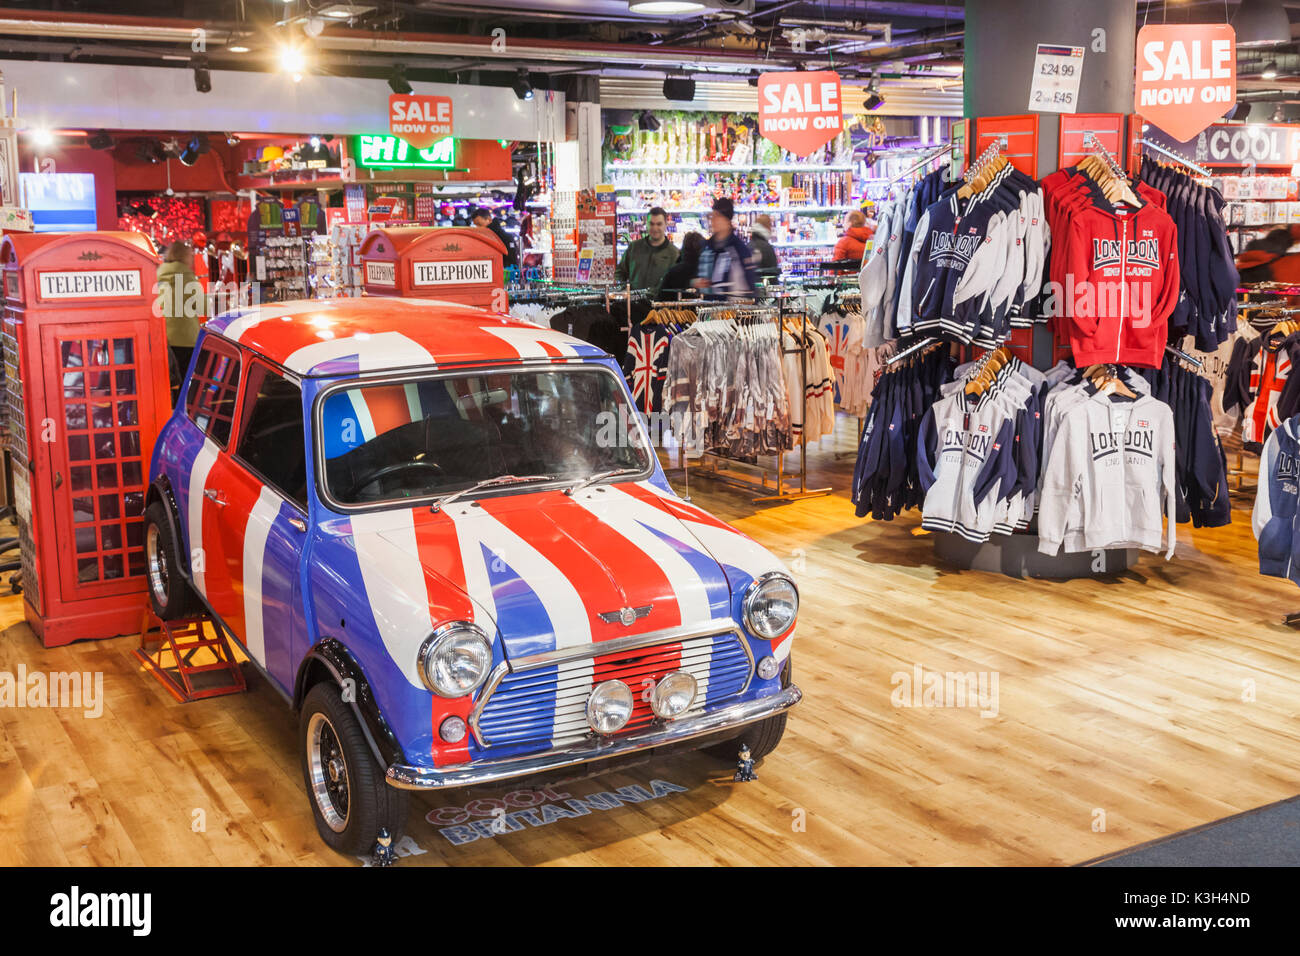 England, London, Piccadilly, Cool Britannia-Geschenk-Shop Stockfoto